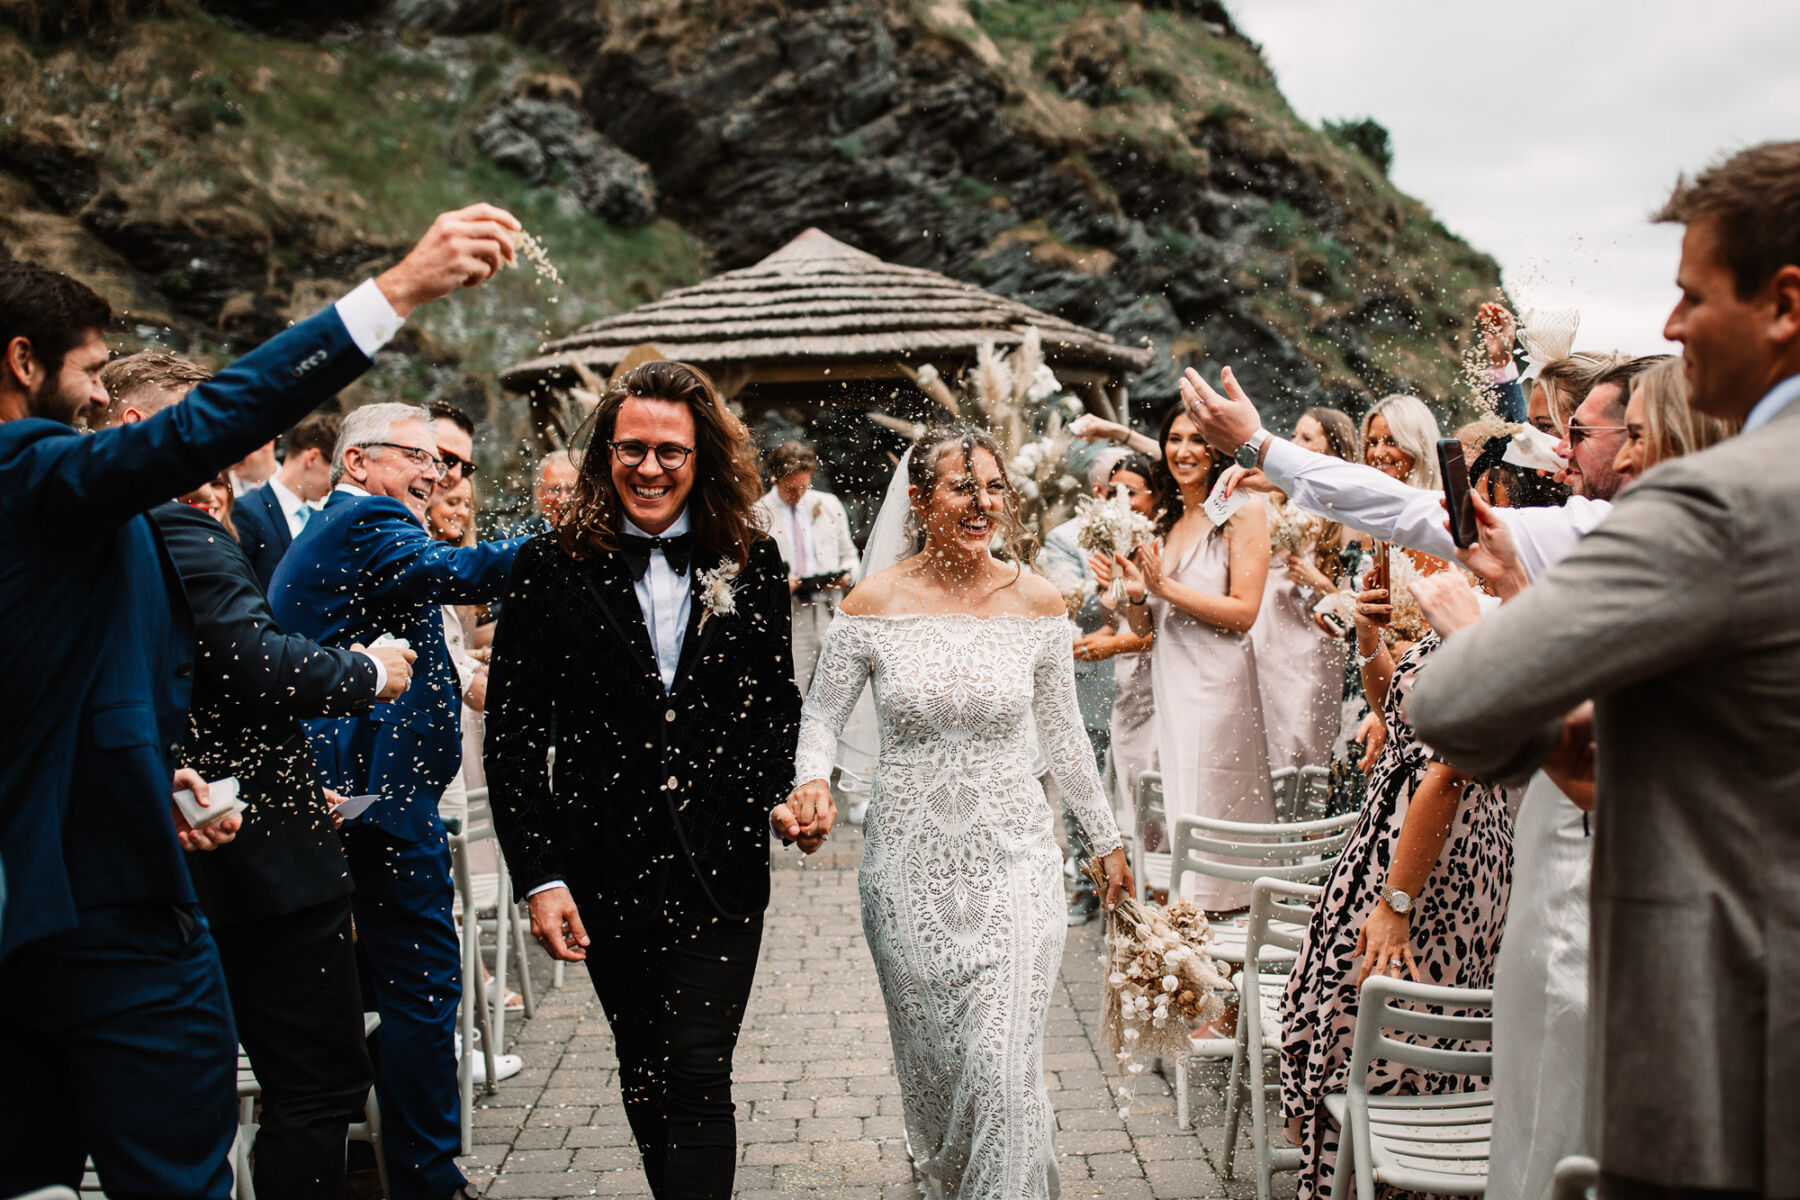 Confetti in outdoor wedding ceremony at Tunnels Beaches wedding venue, Devon